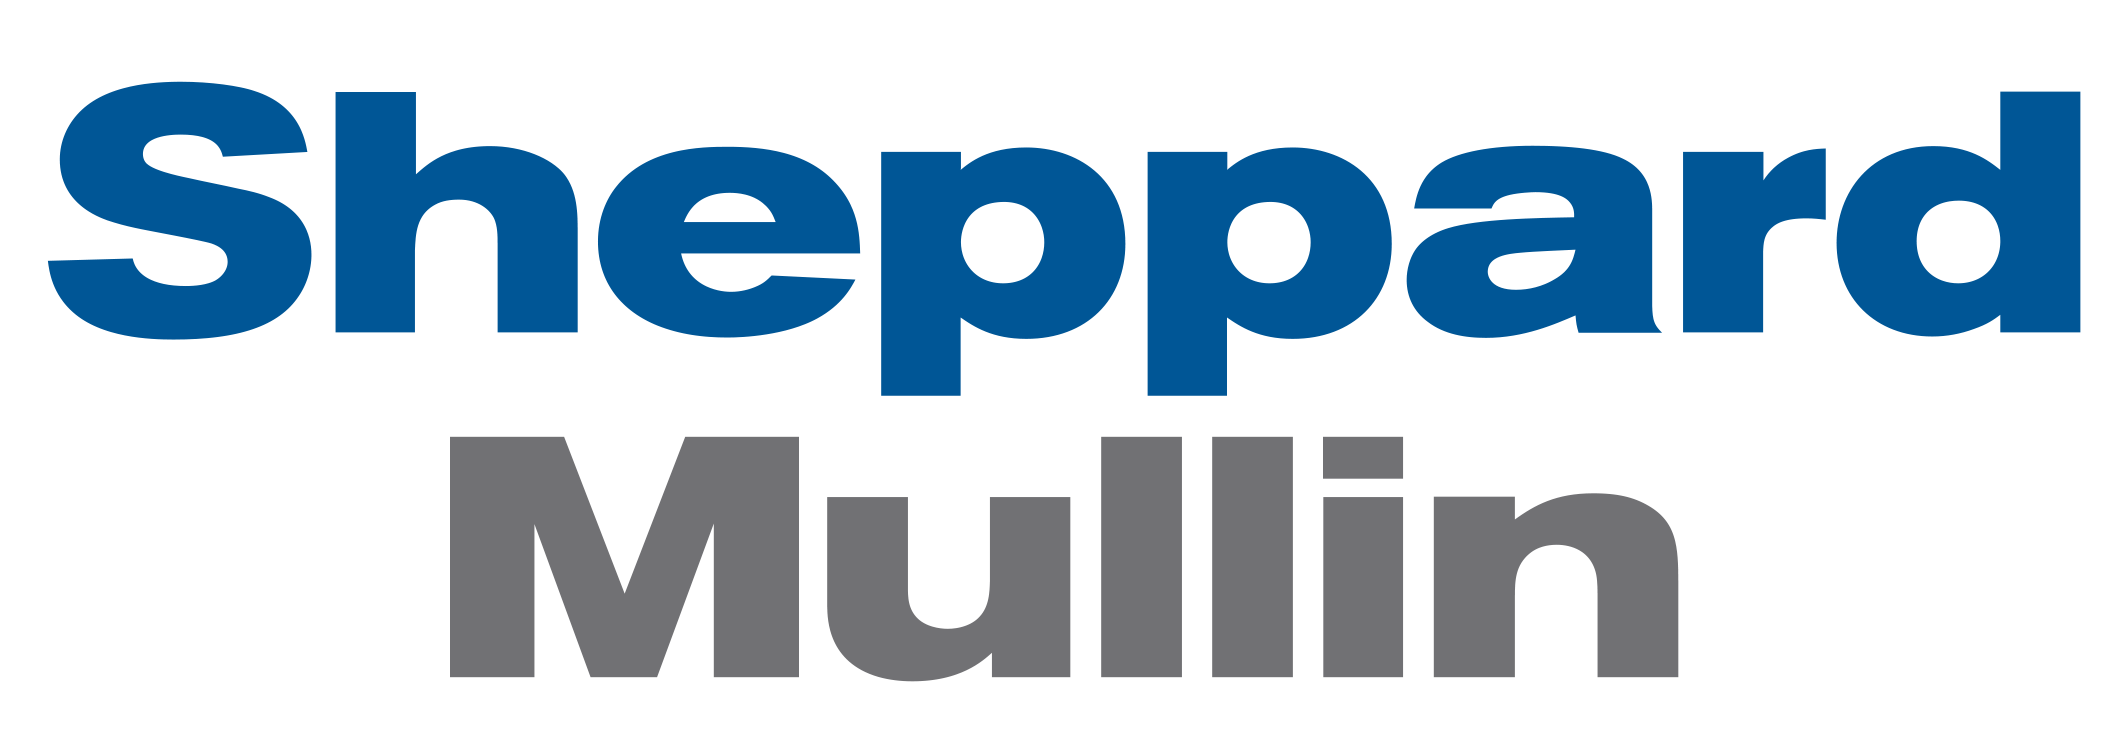 SheppardMullin Logo_Stacked_4C_Centered.png